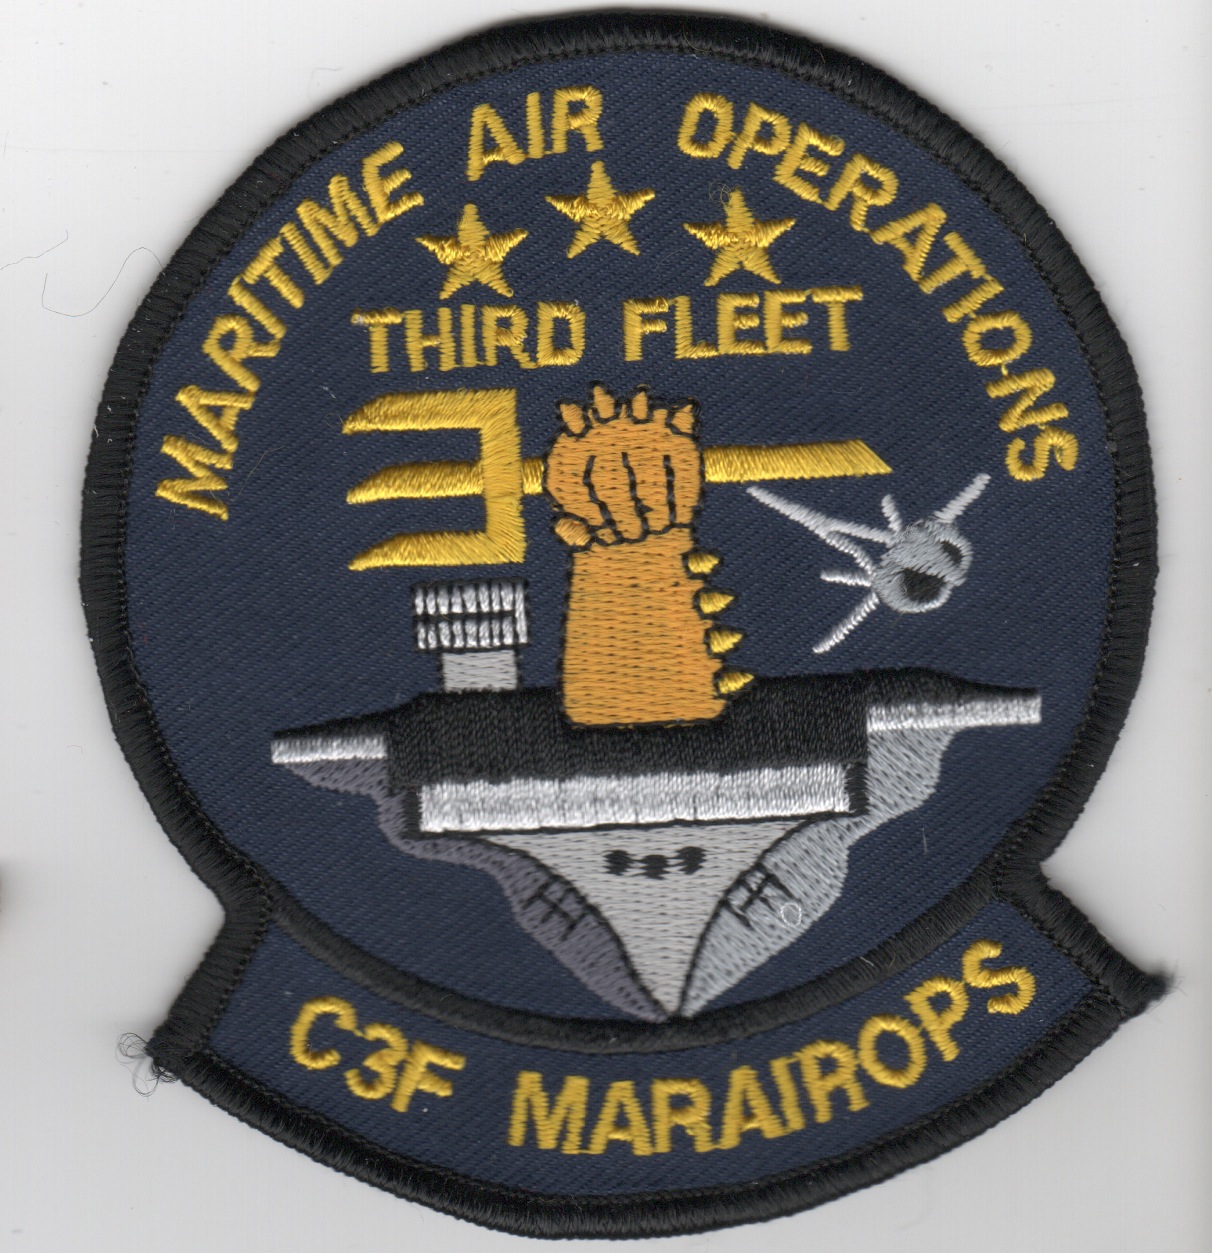 USN THIRD Fleet-C3F MARAIROPS Patch